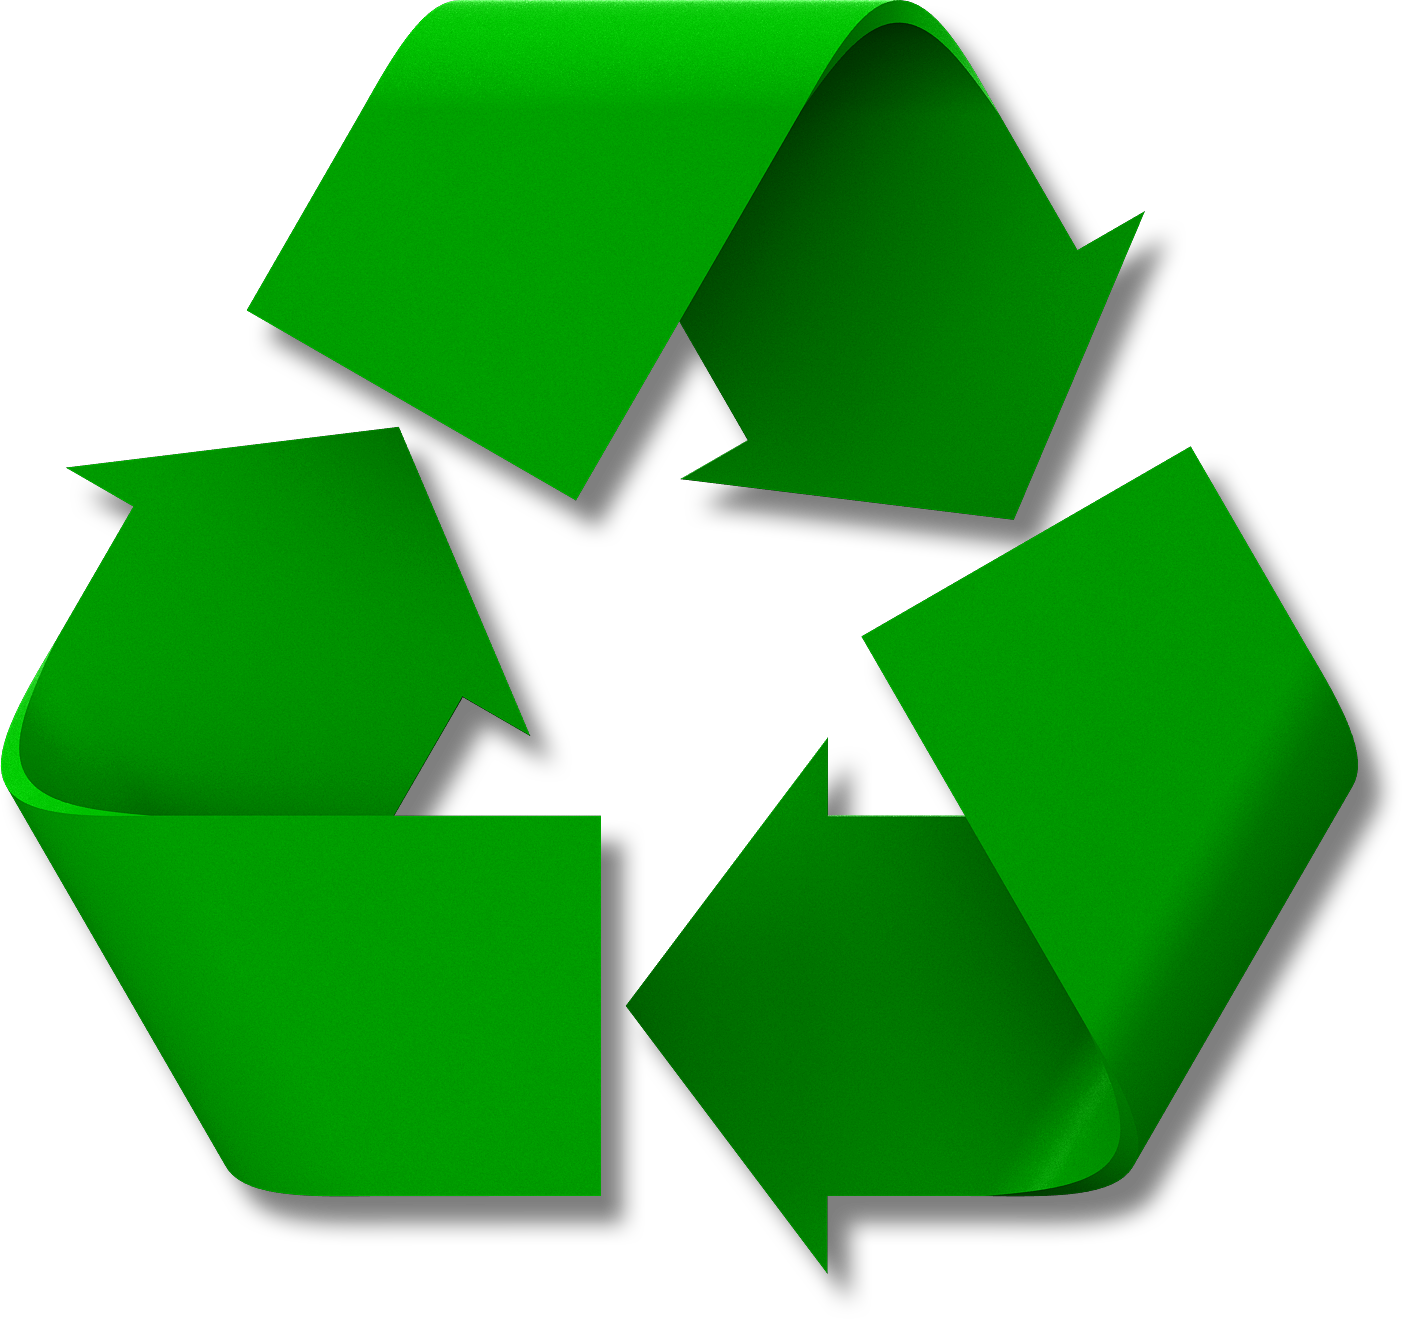 RecycleSymbol